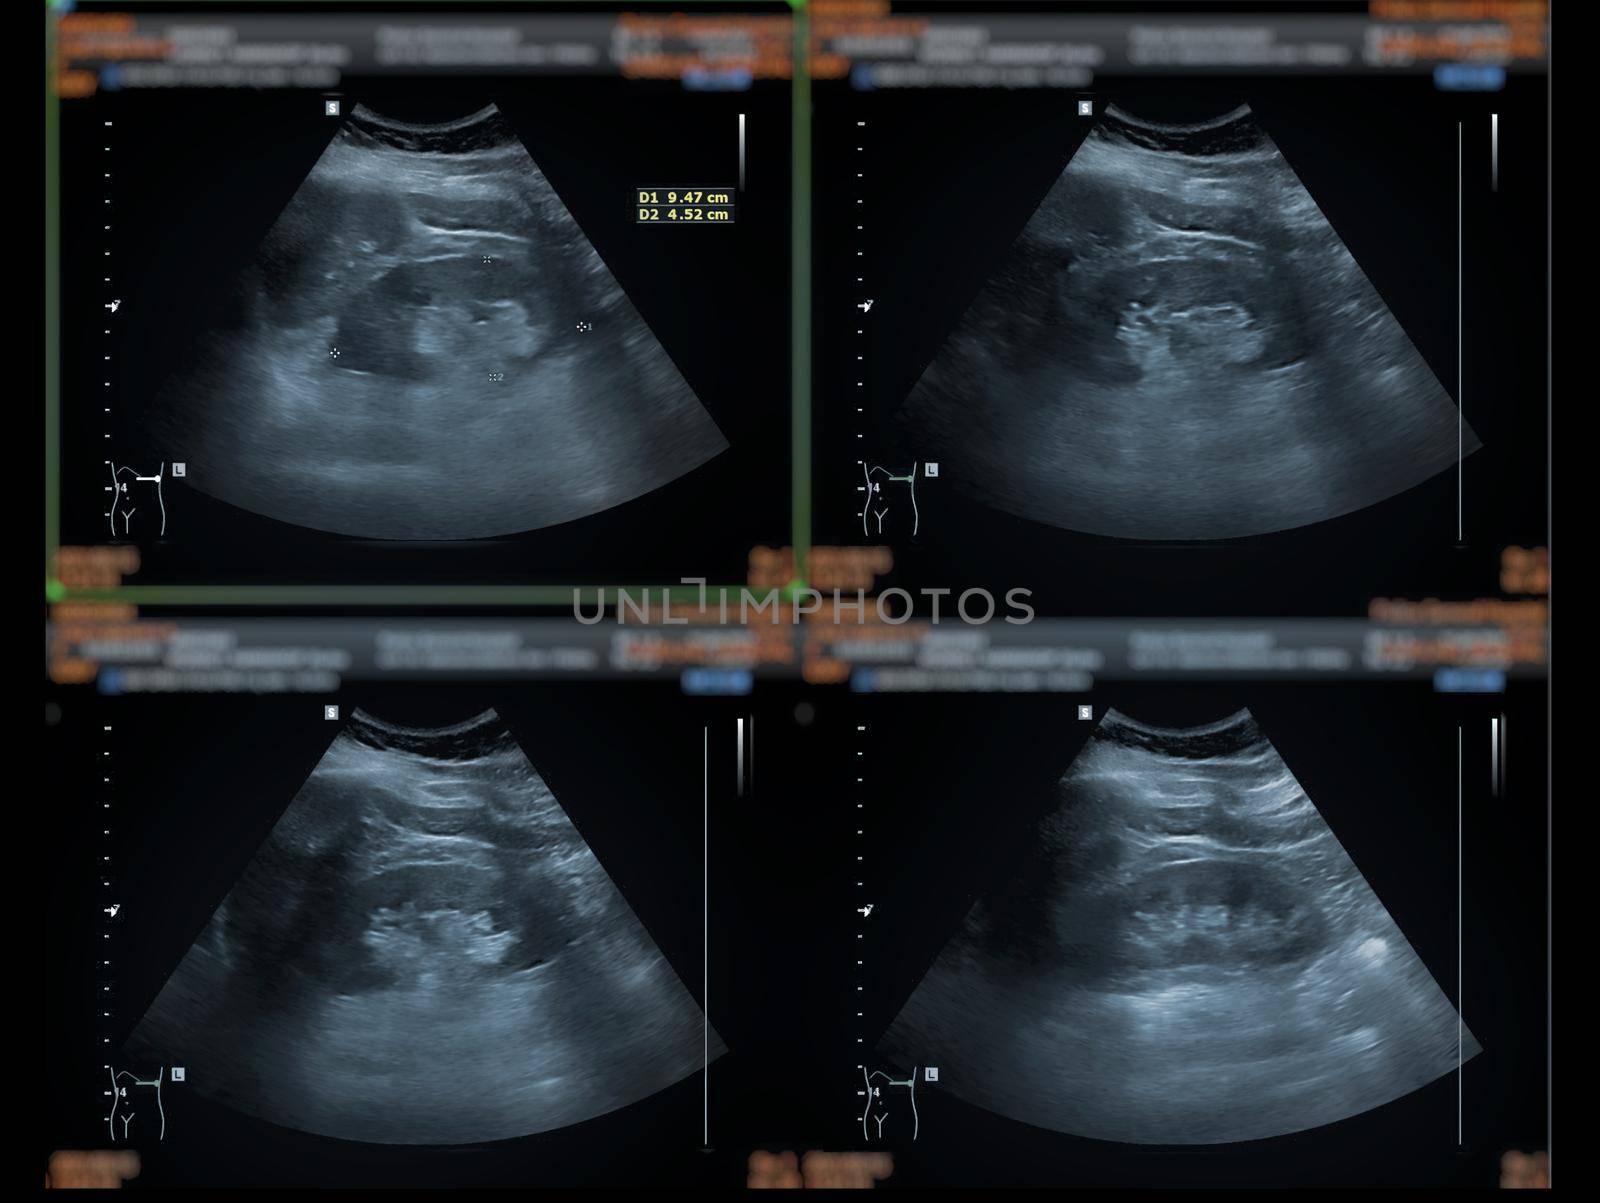 Ultrasound upper abdomen showing Liver, gall bladder and kidney for screening abdominal disease. by samunella